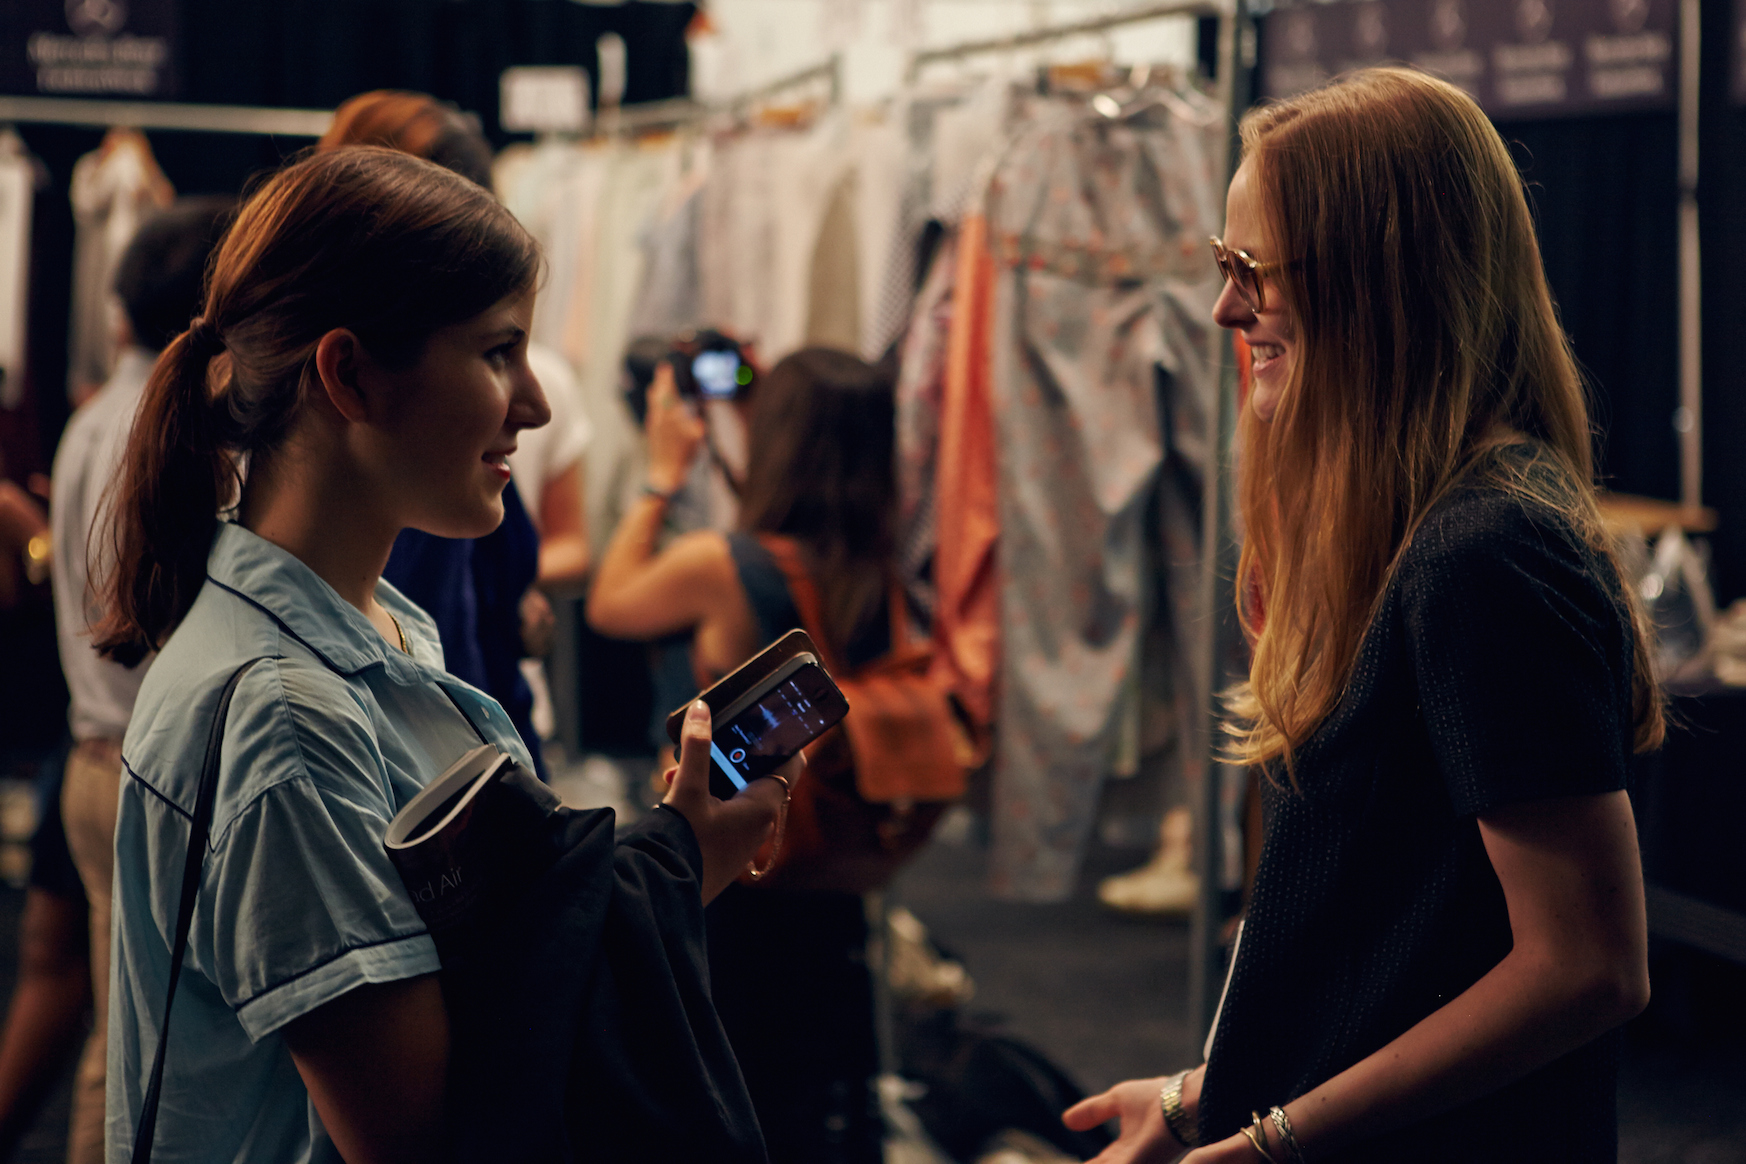 Alex Suarez backstage at the Academy of Art University New York Fashion Week Spring 2015 show, interviewing designer Madison Detro